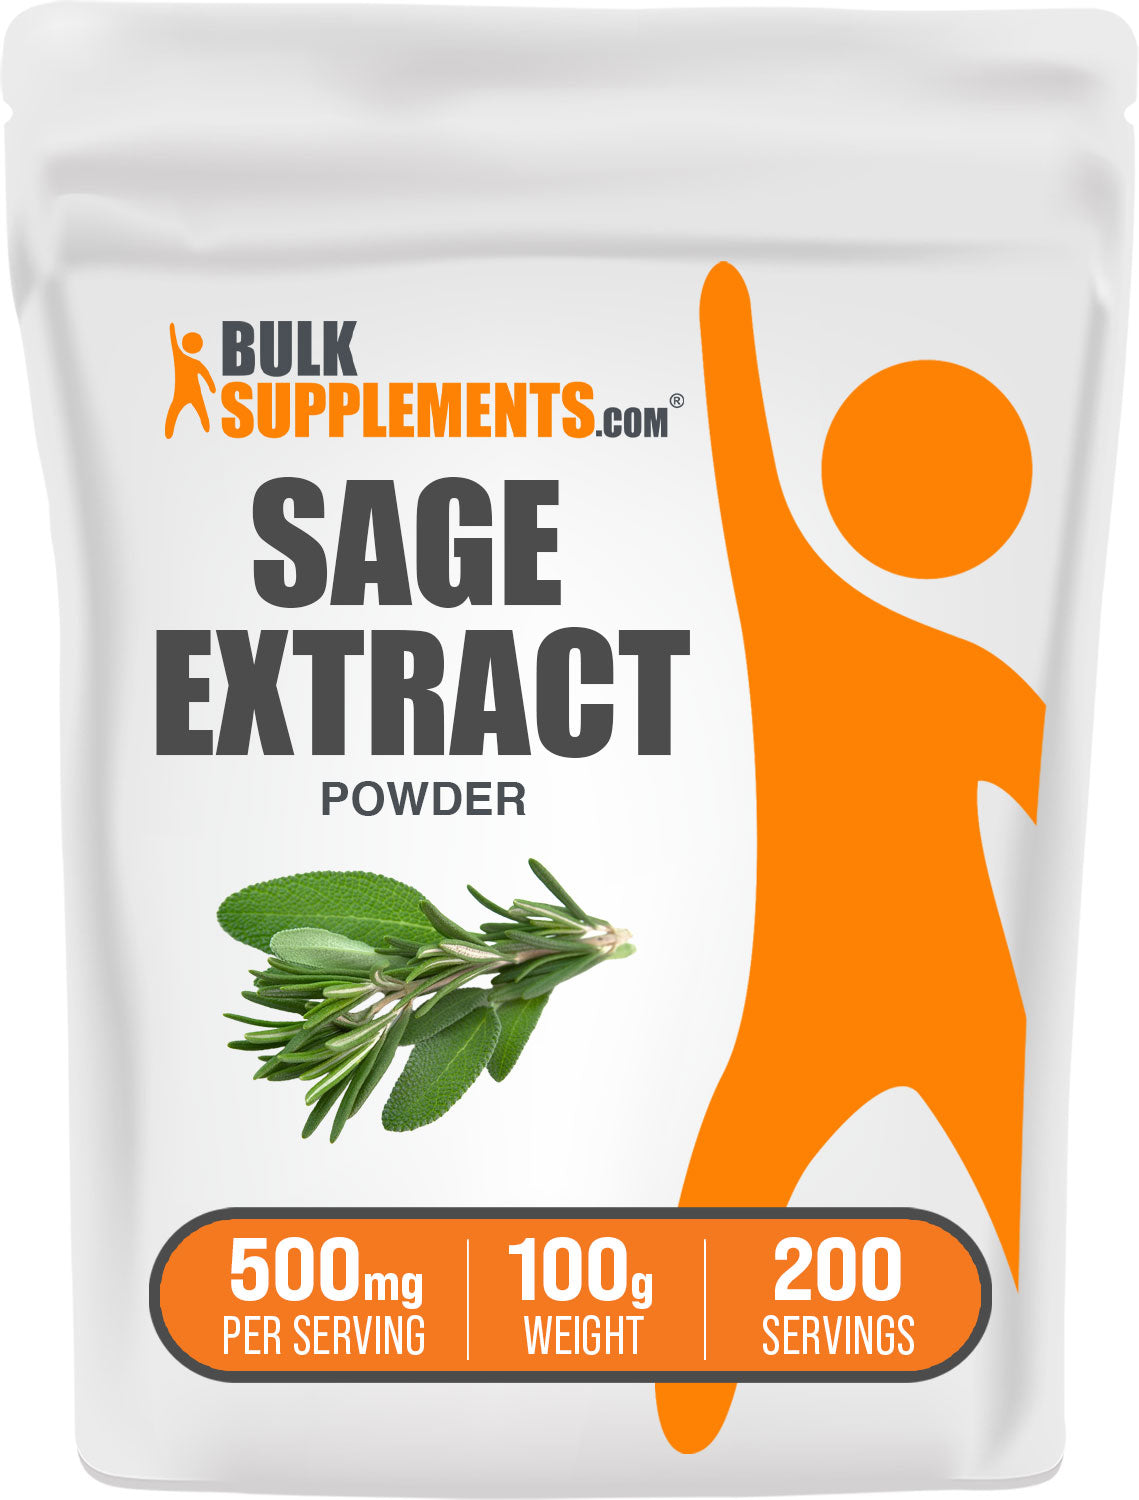 BulkSupplements.com Sage Extract Powder 100g bag